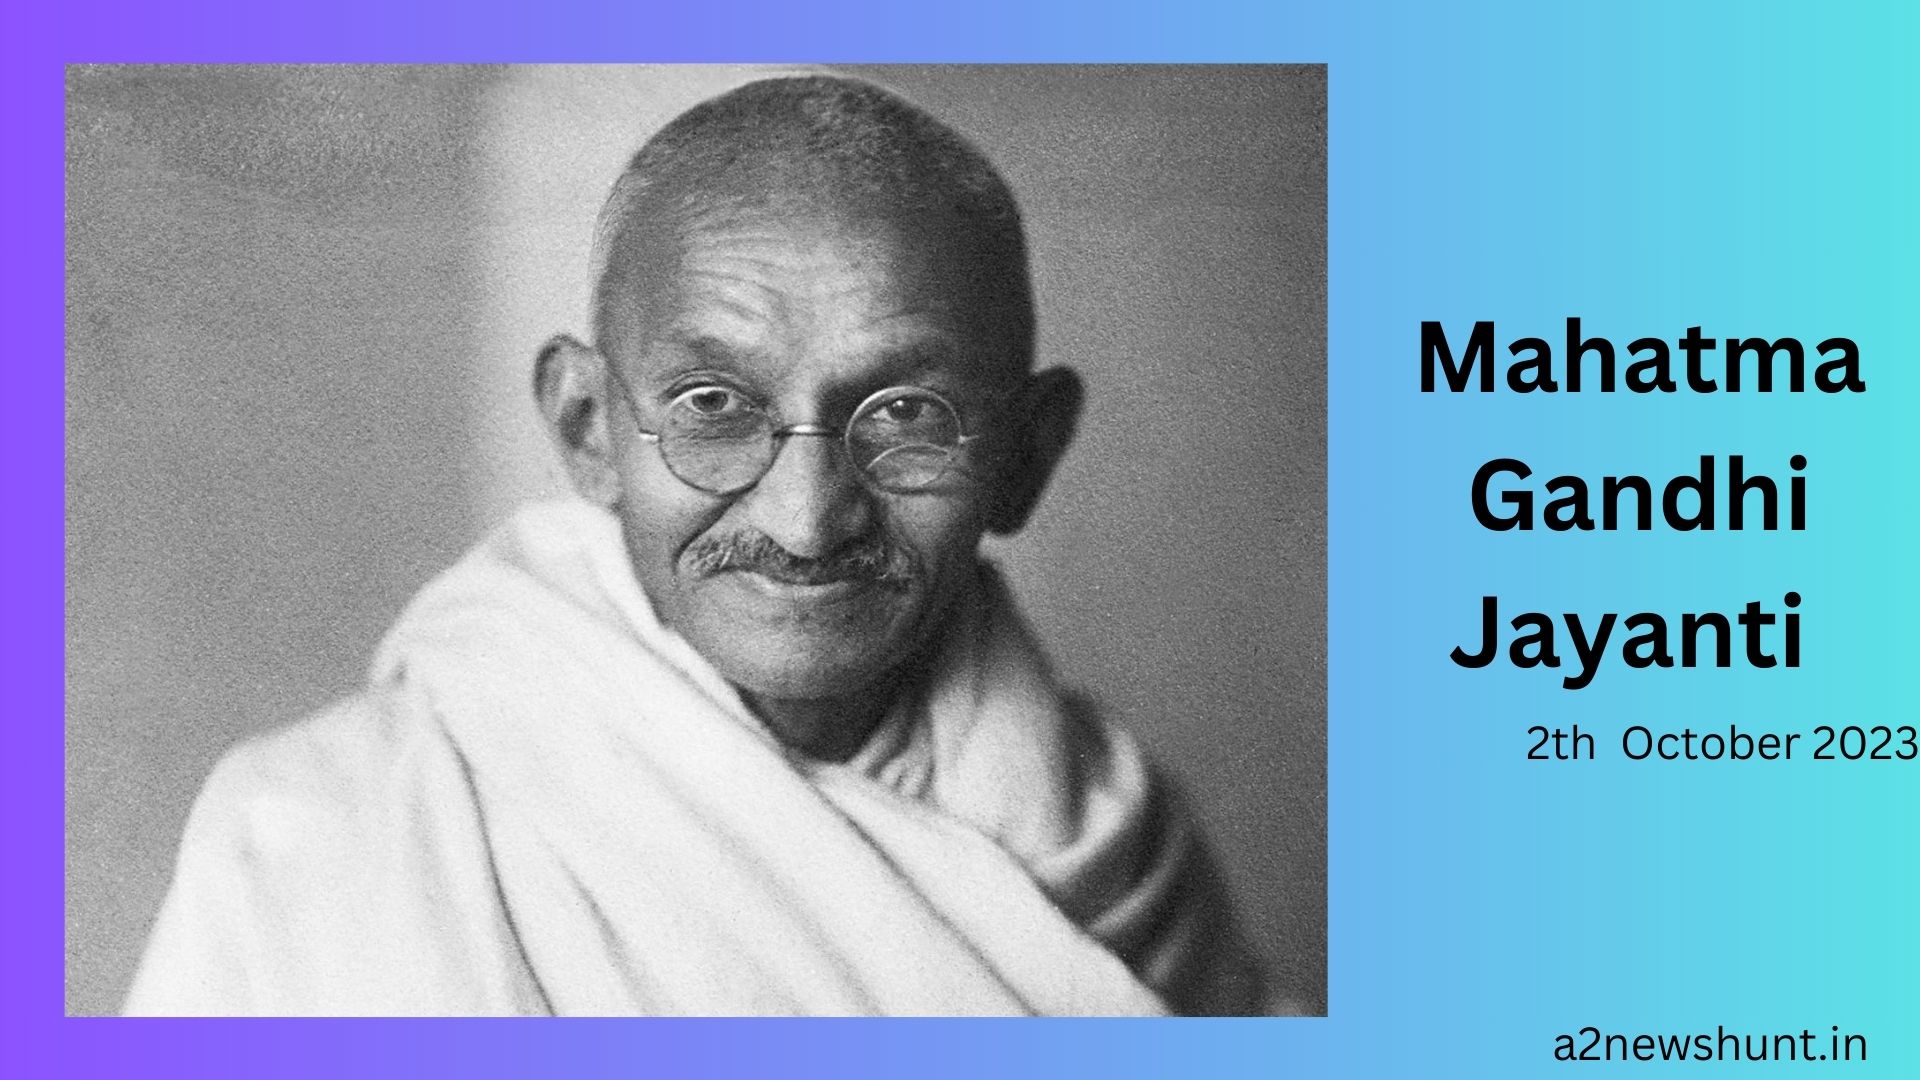 Mahatma Gandhi Jayanti Celebrating The Legacy Of A Visionary Leader A2 News Hunt 6439